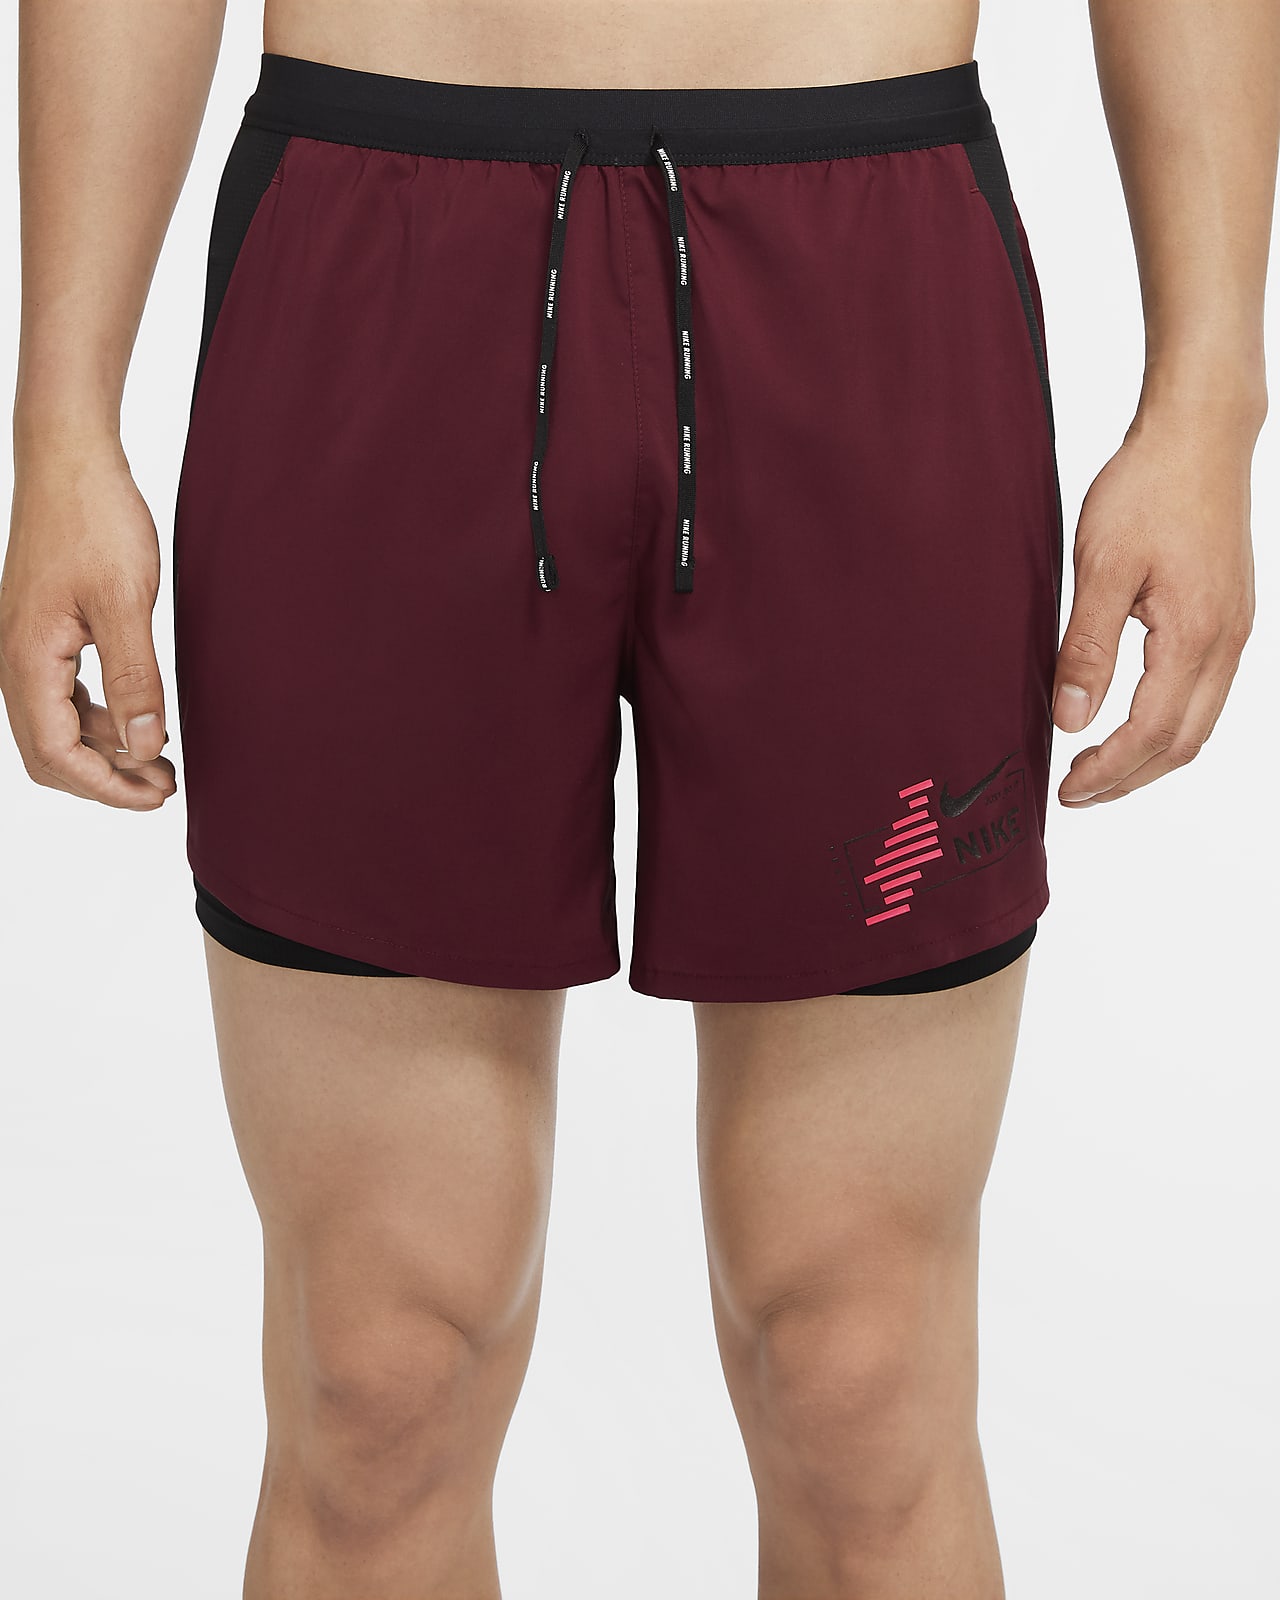 nike flex stride 2 in 1 running shorts mens